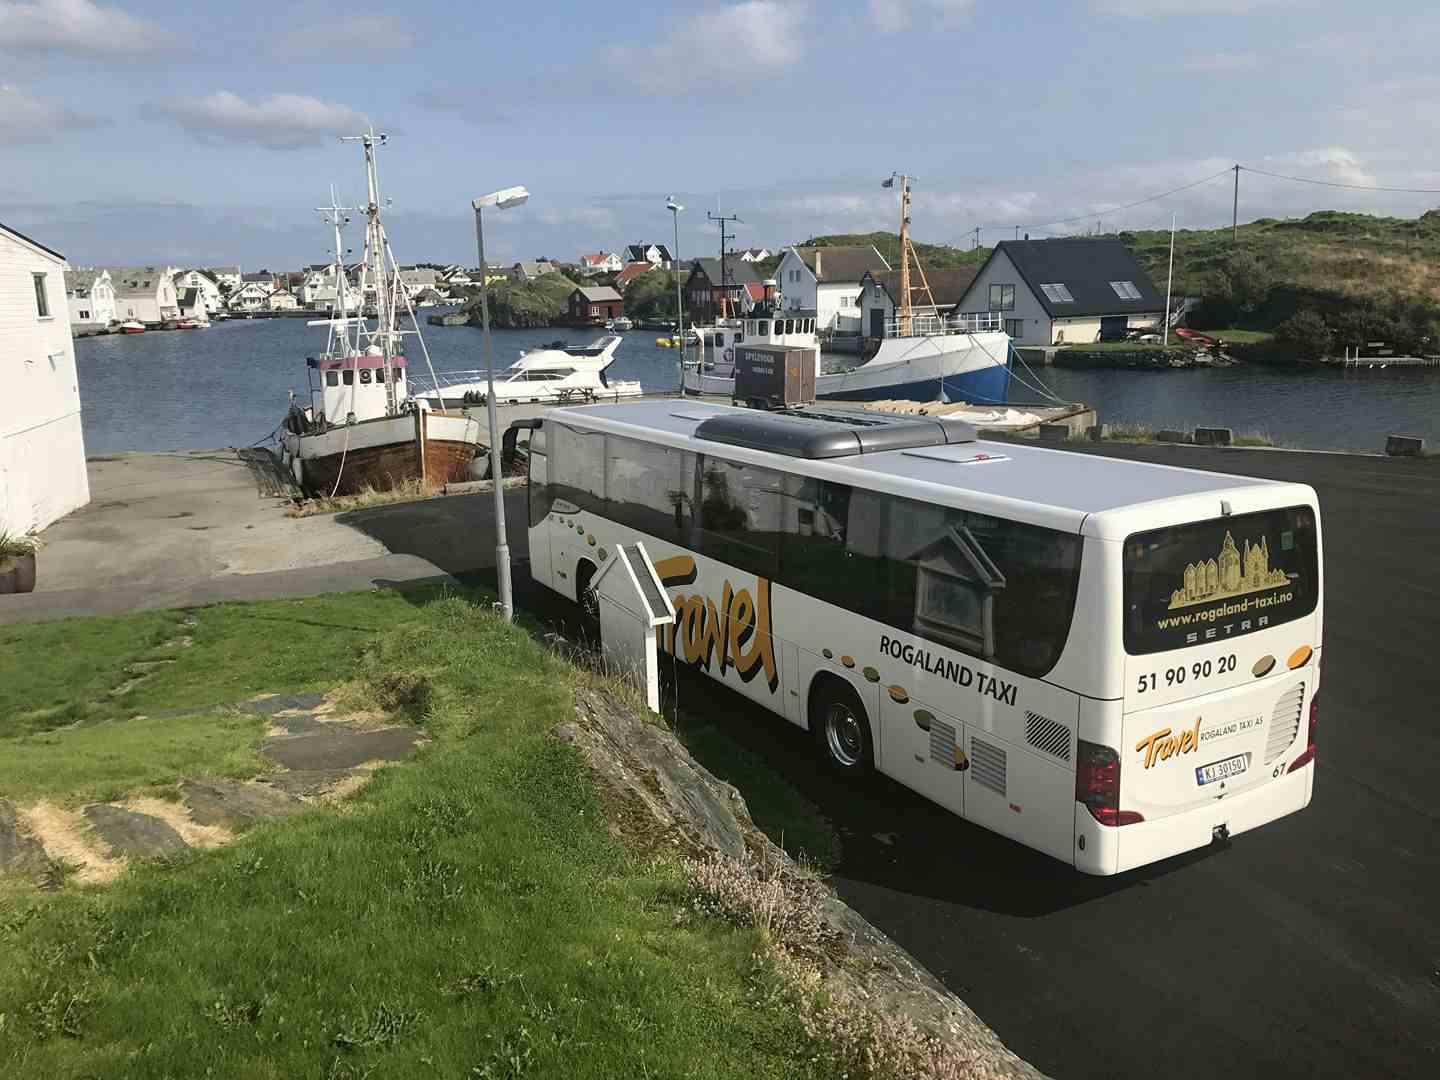 Rogaland Taxi